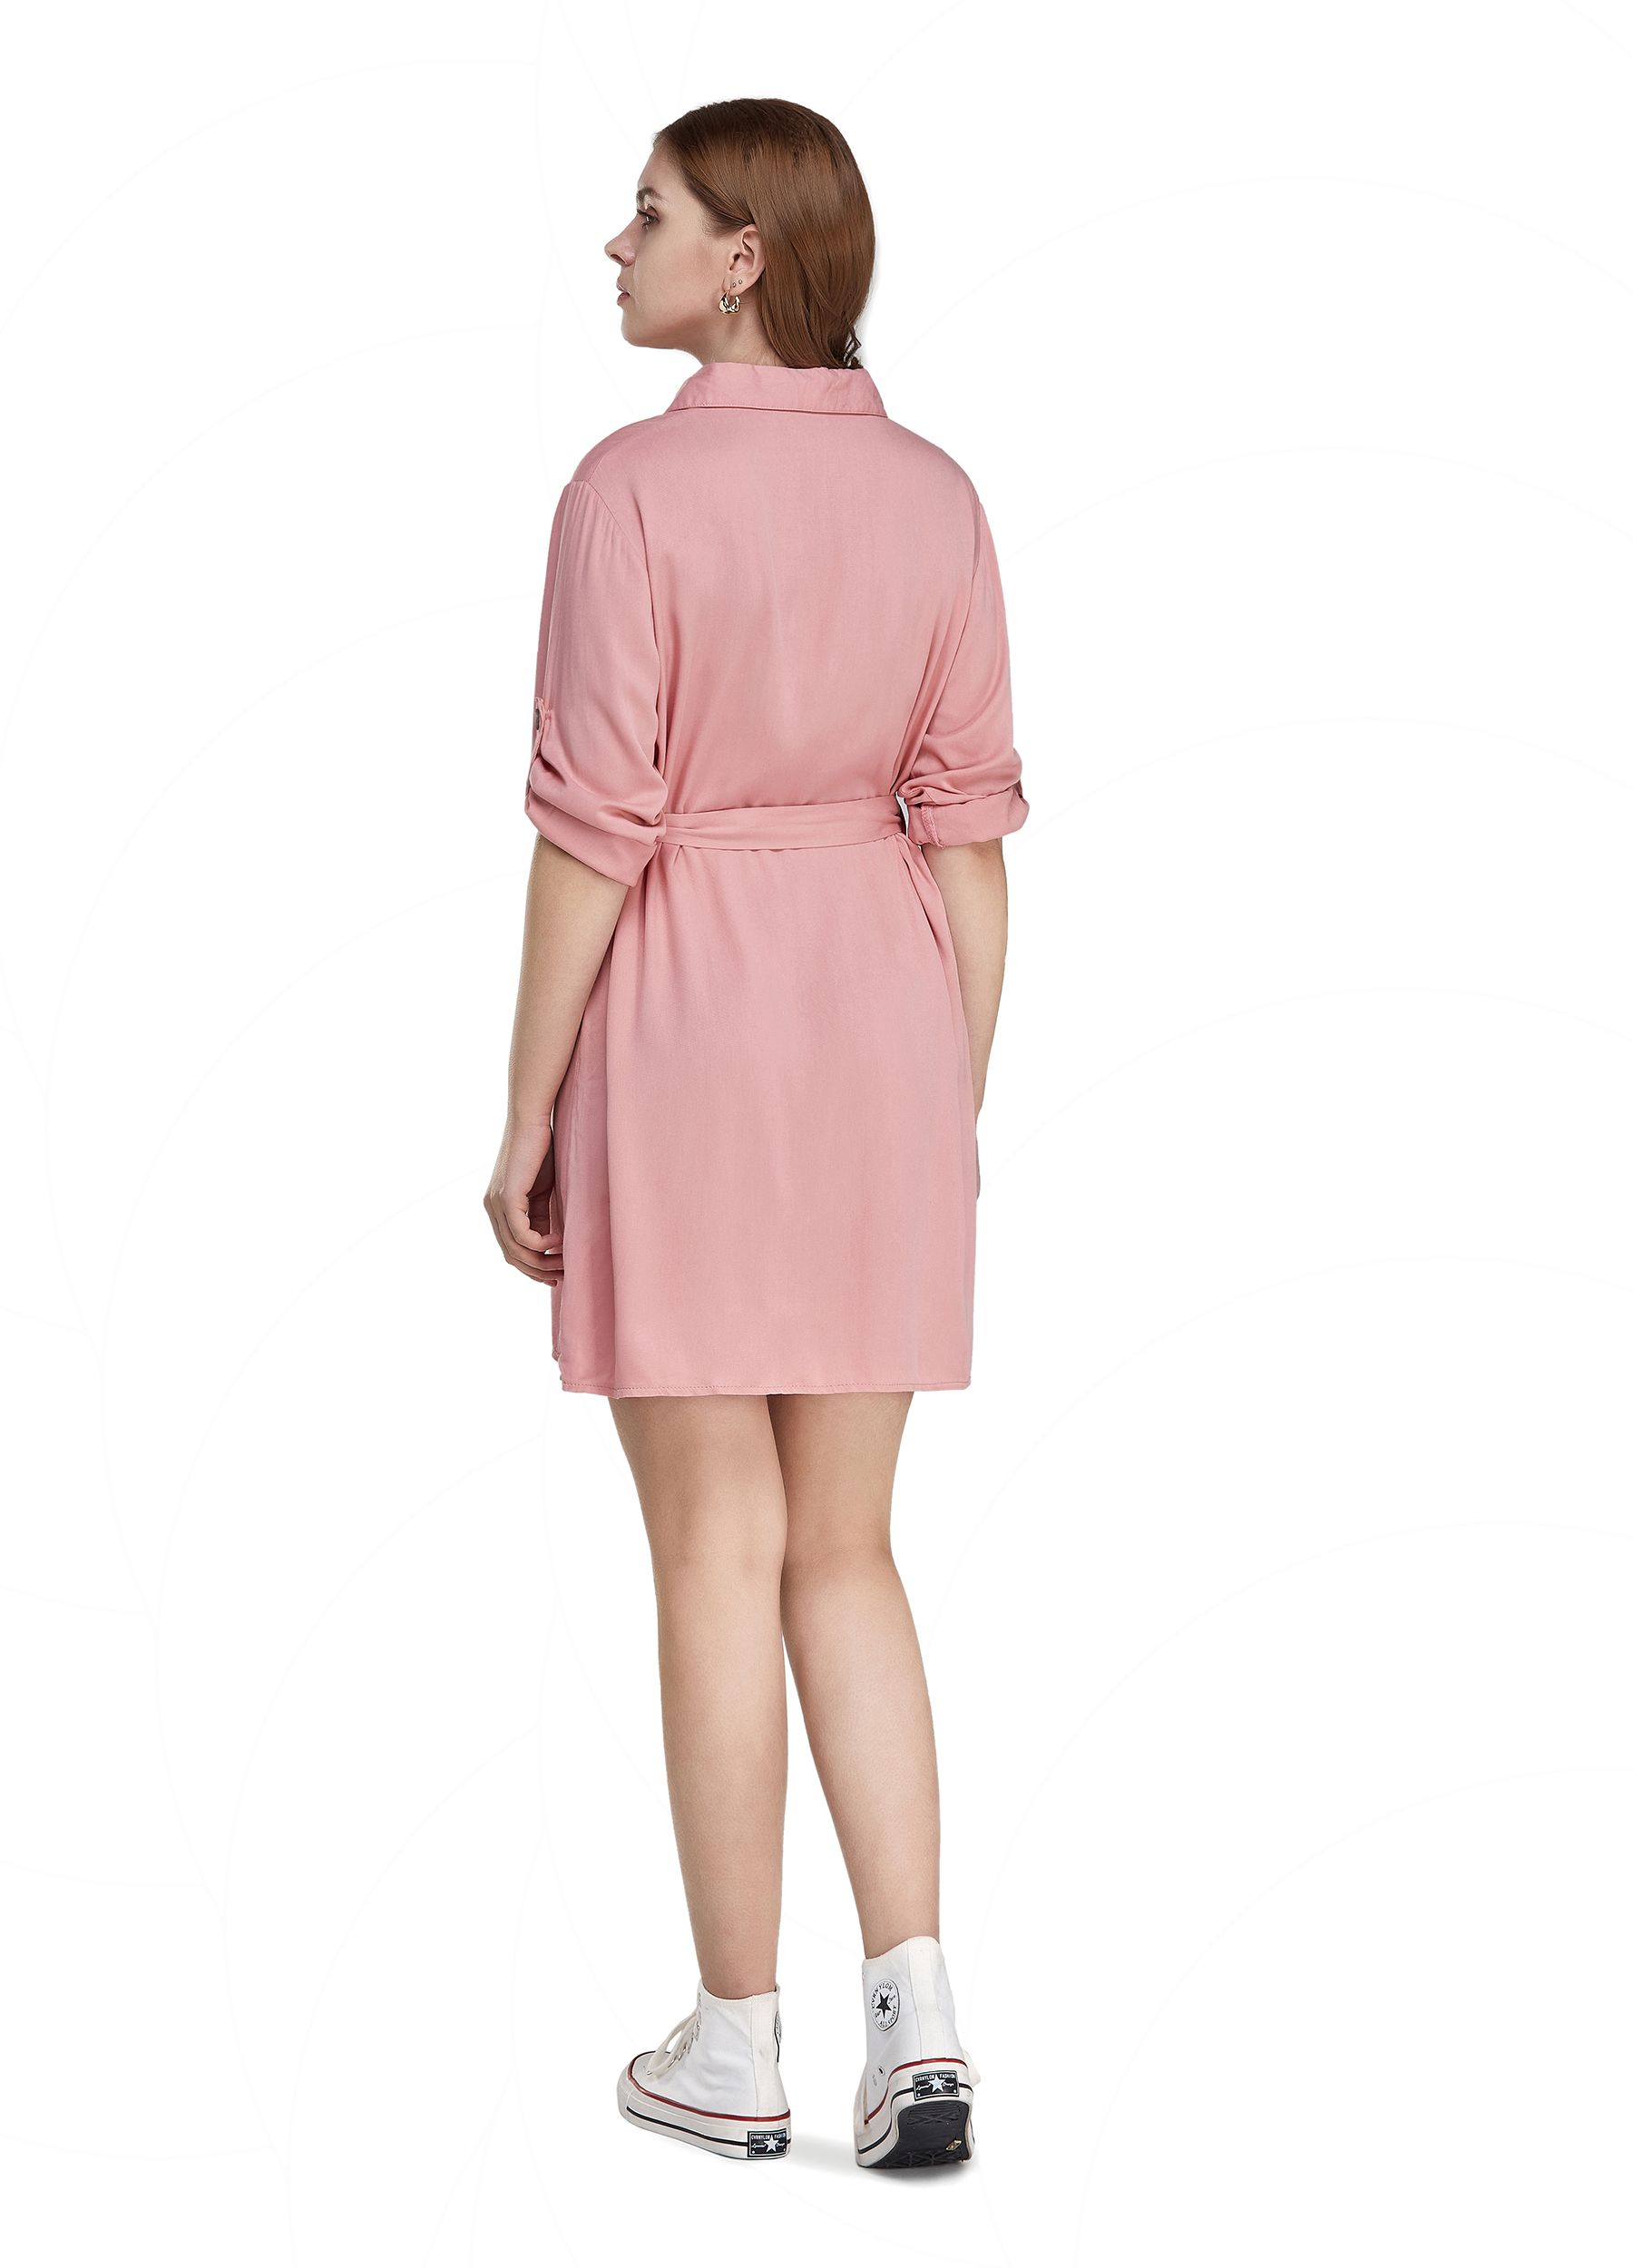 MECALA Women 3/4 Long Sleeve Button Down Shirt Dress Casual Midi Dress Pink L - image 3 of 10